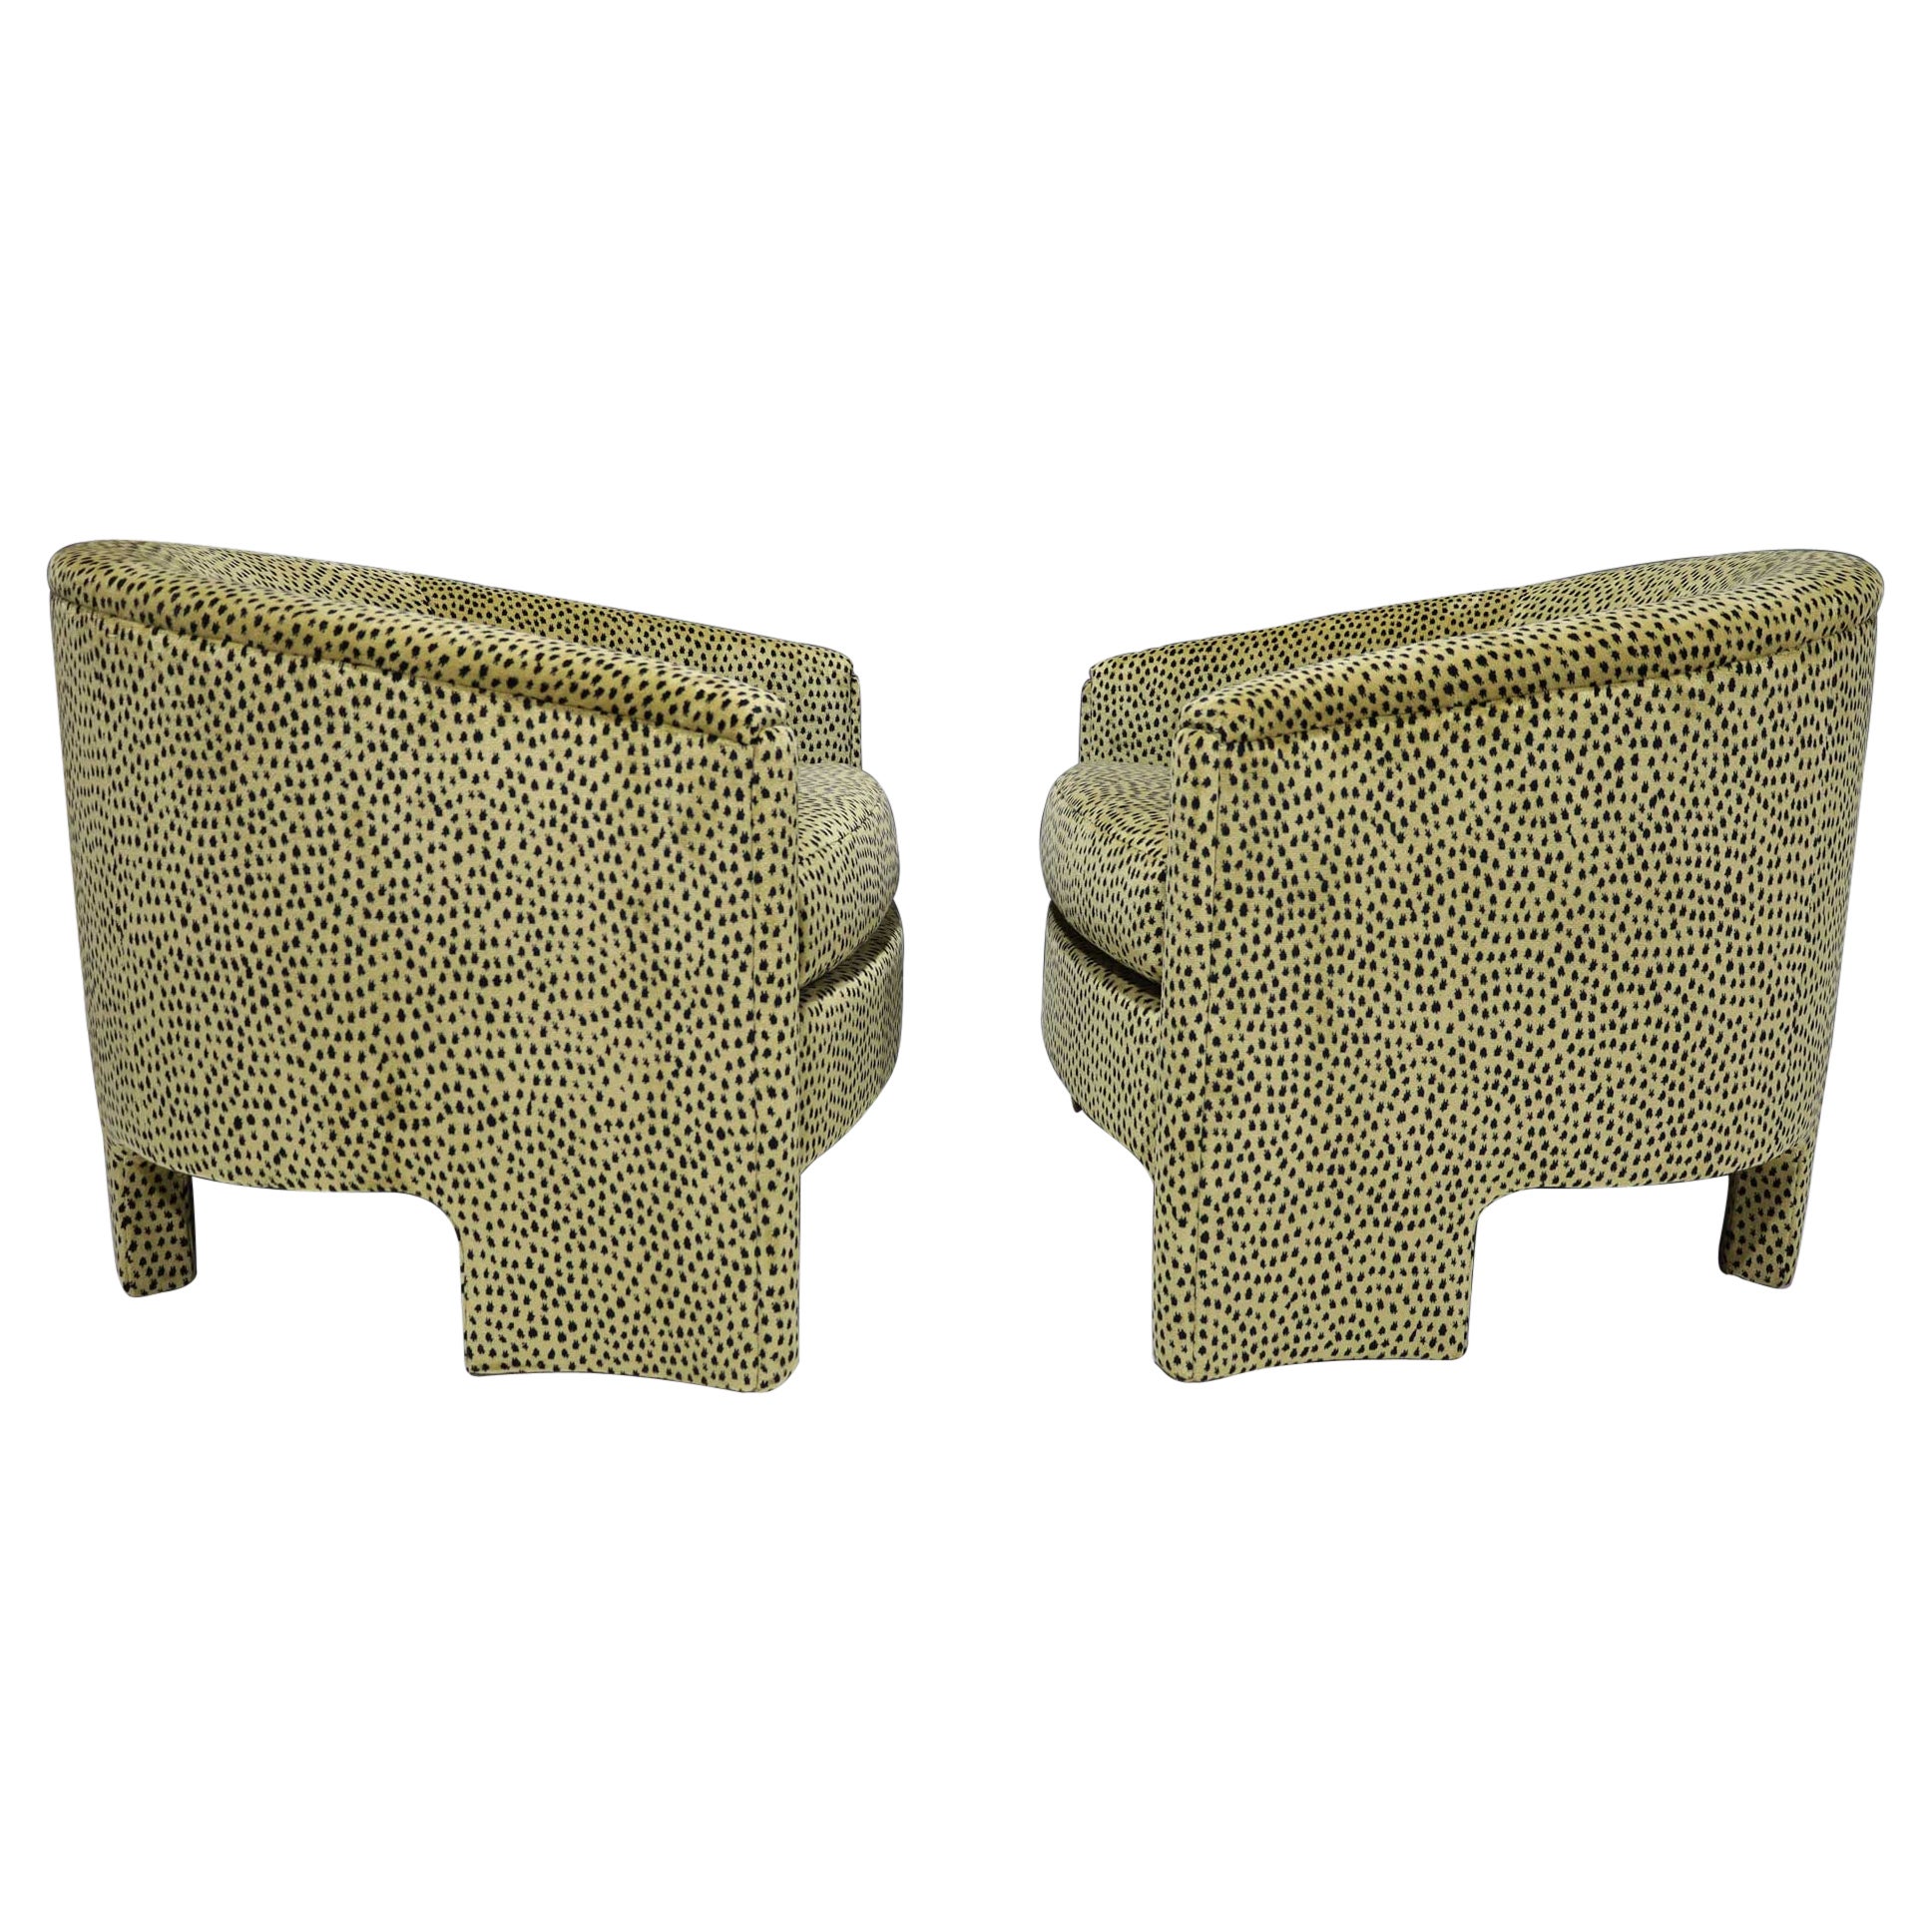 Pair of Mid Century Modern Tub Chairs in Cheetah Print Velvet